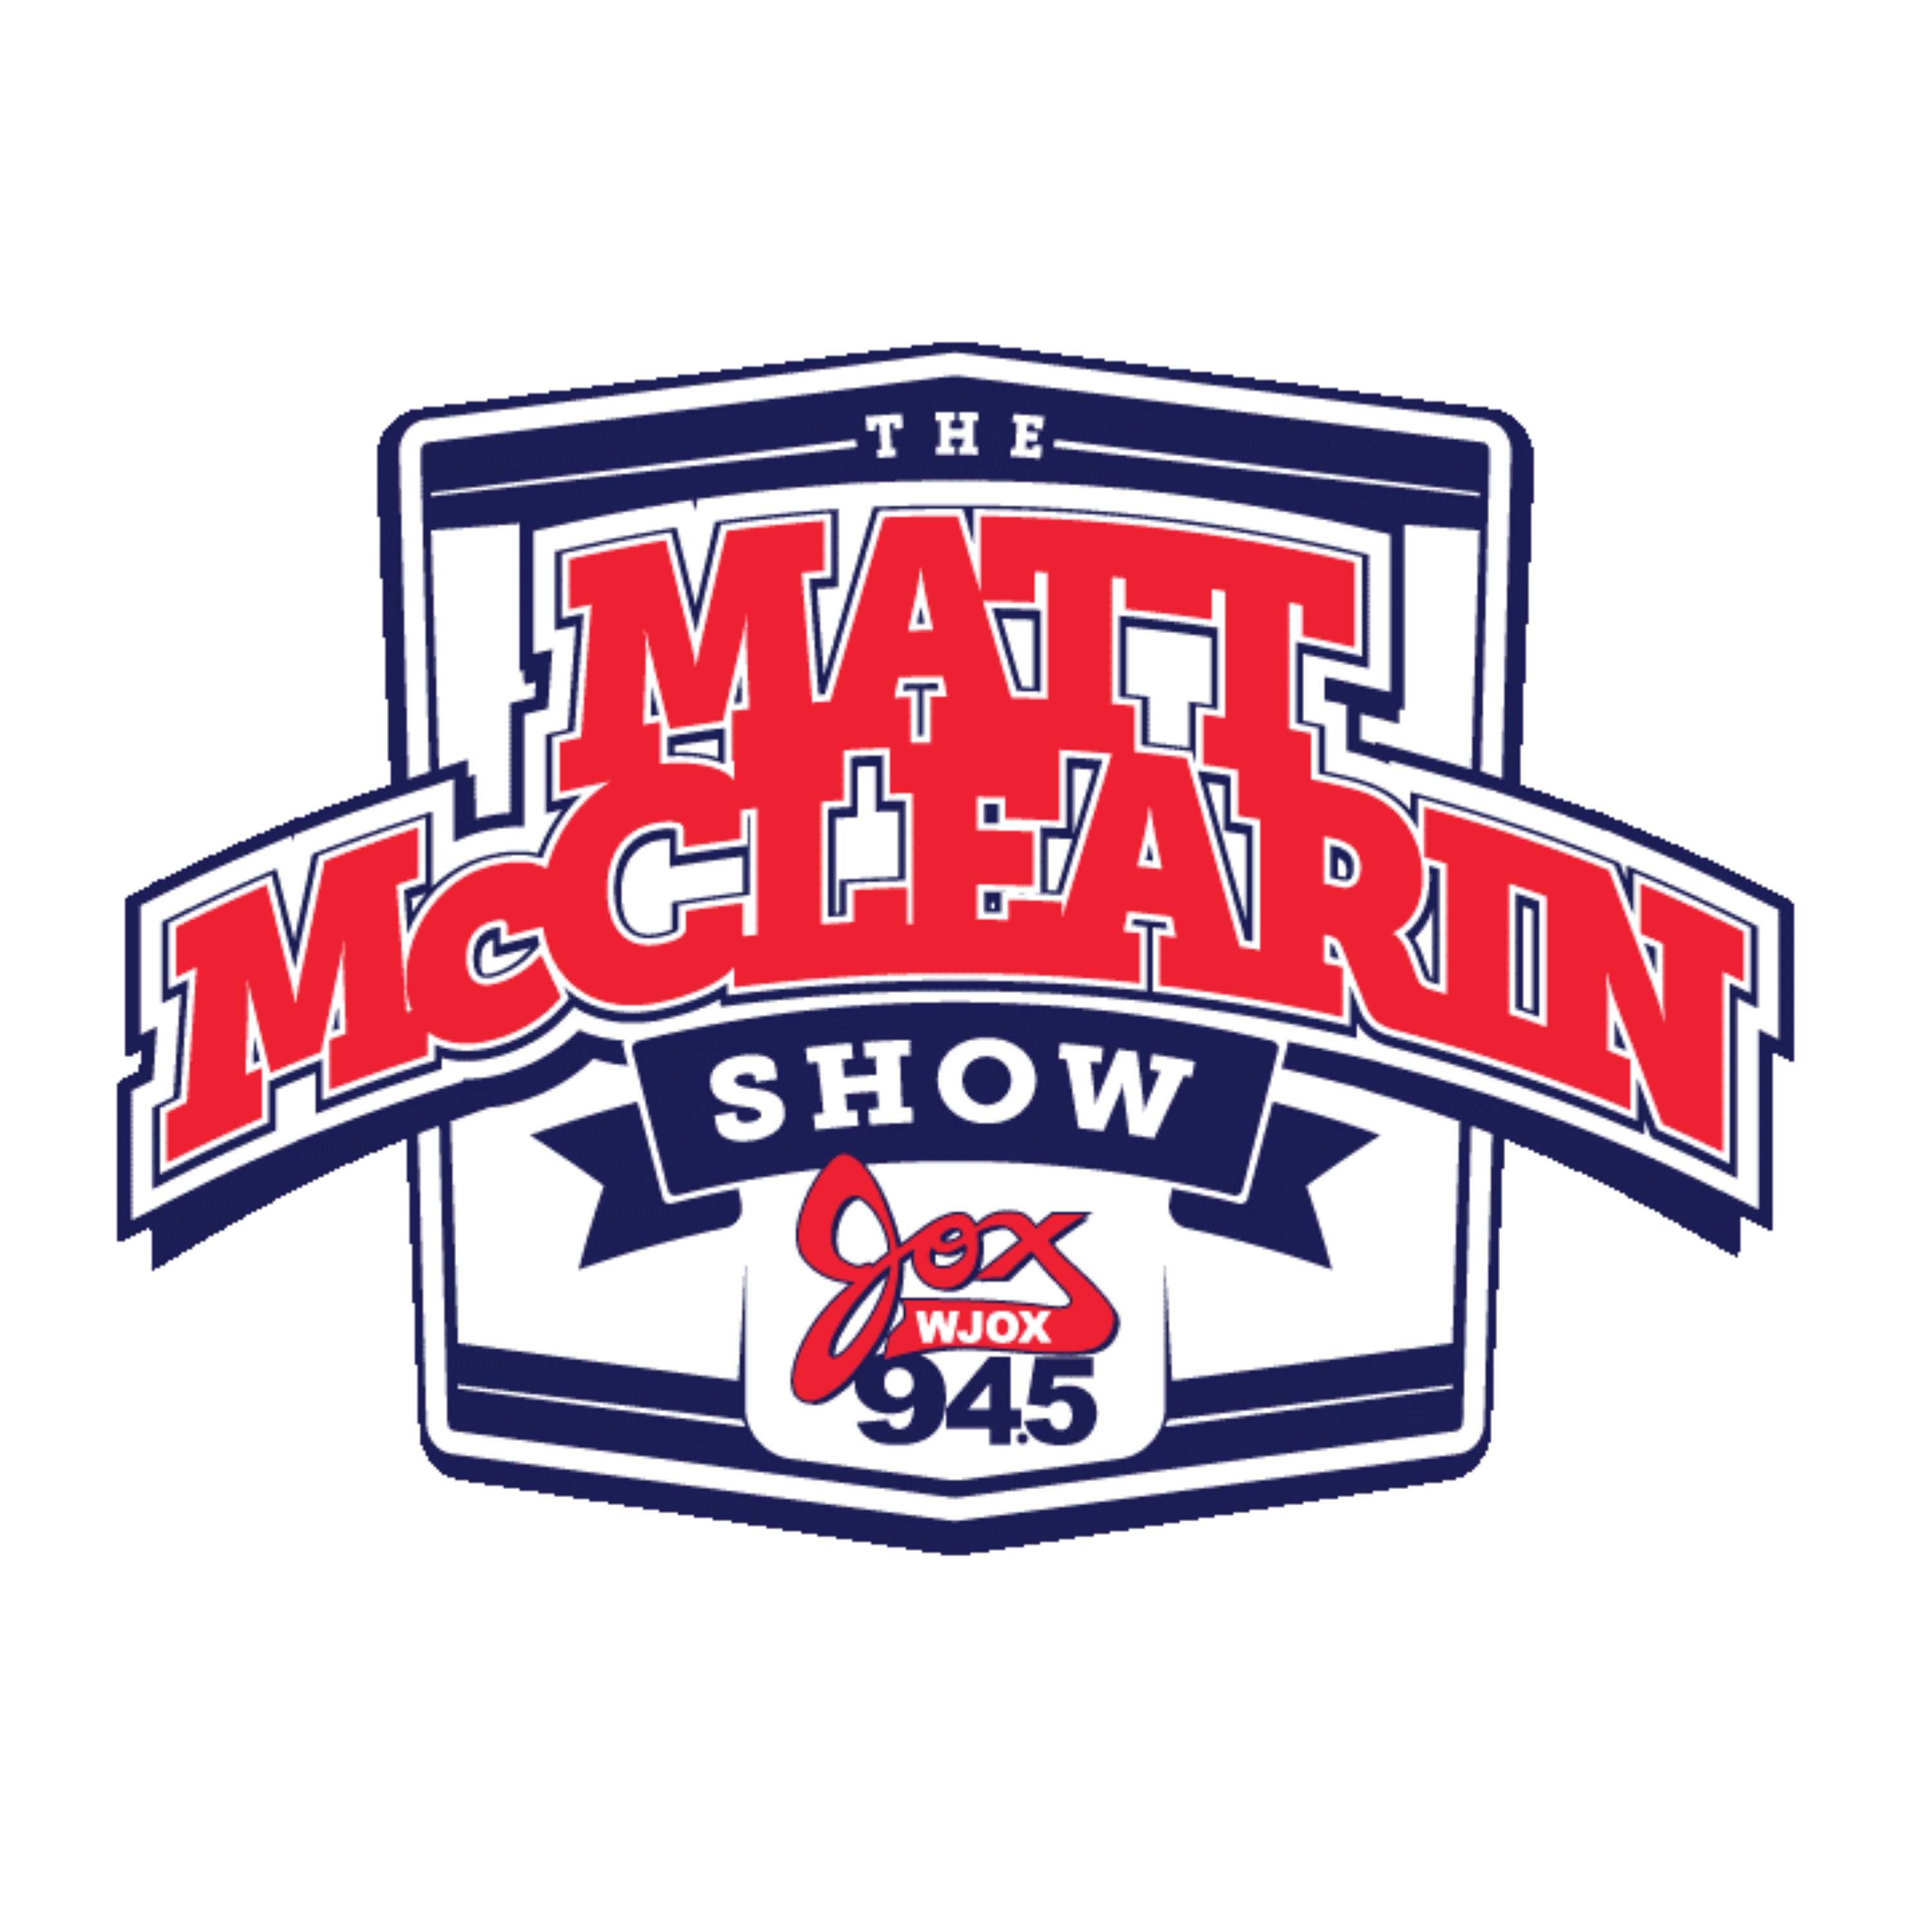 7-28-23 The Matt McClearin Show: Conrad's Final Corner